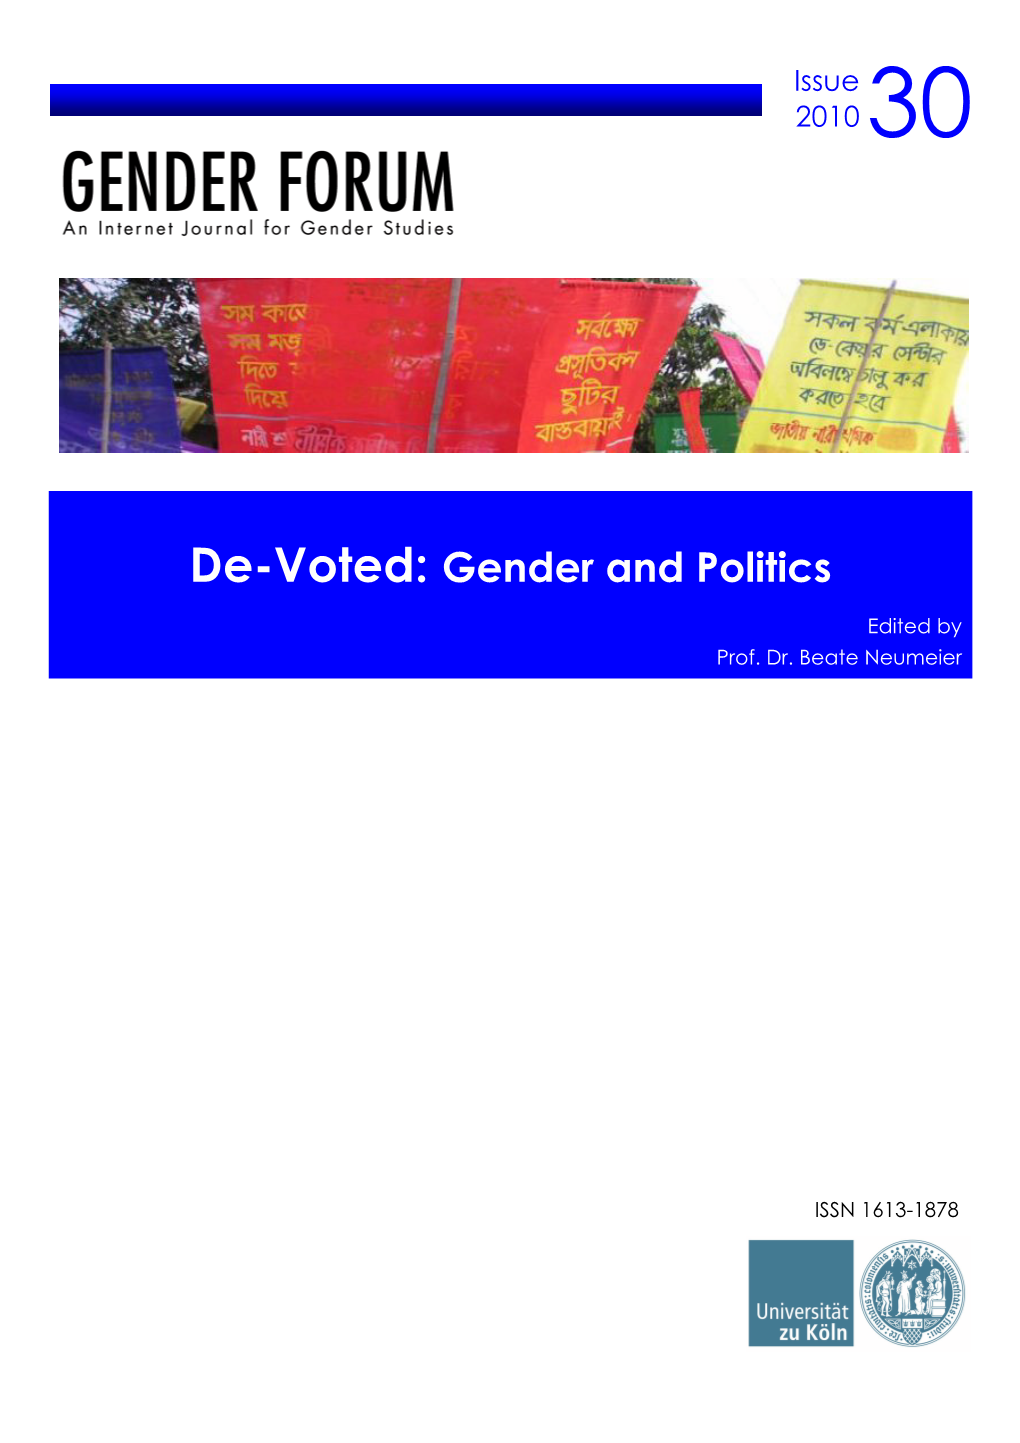 De-Voted: Gender and Politics